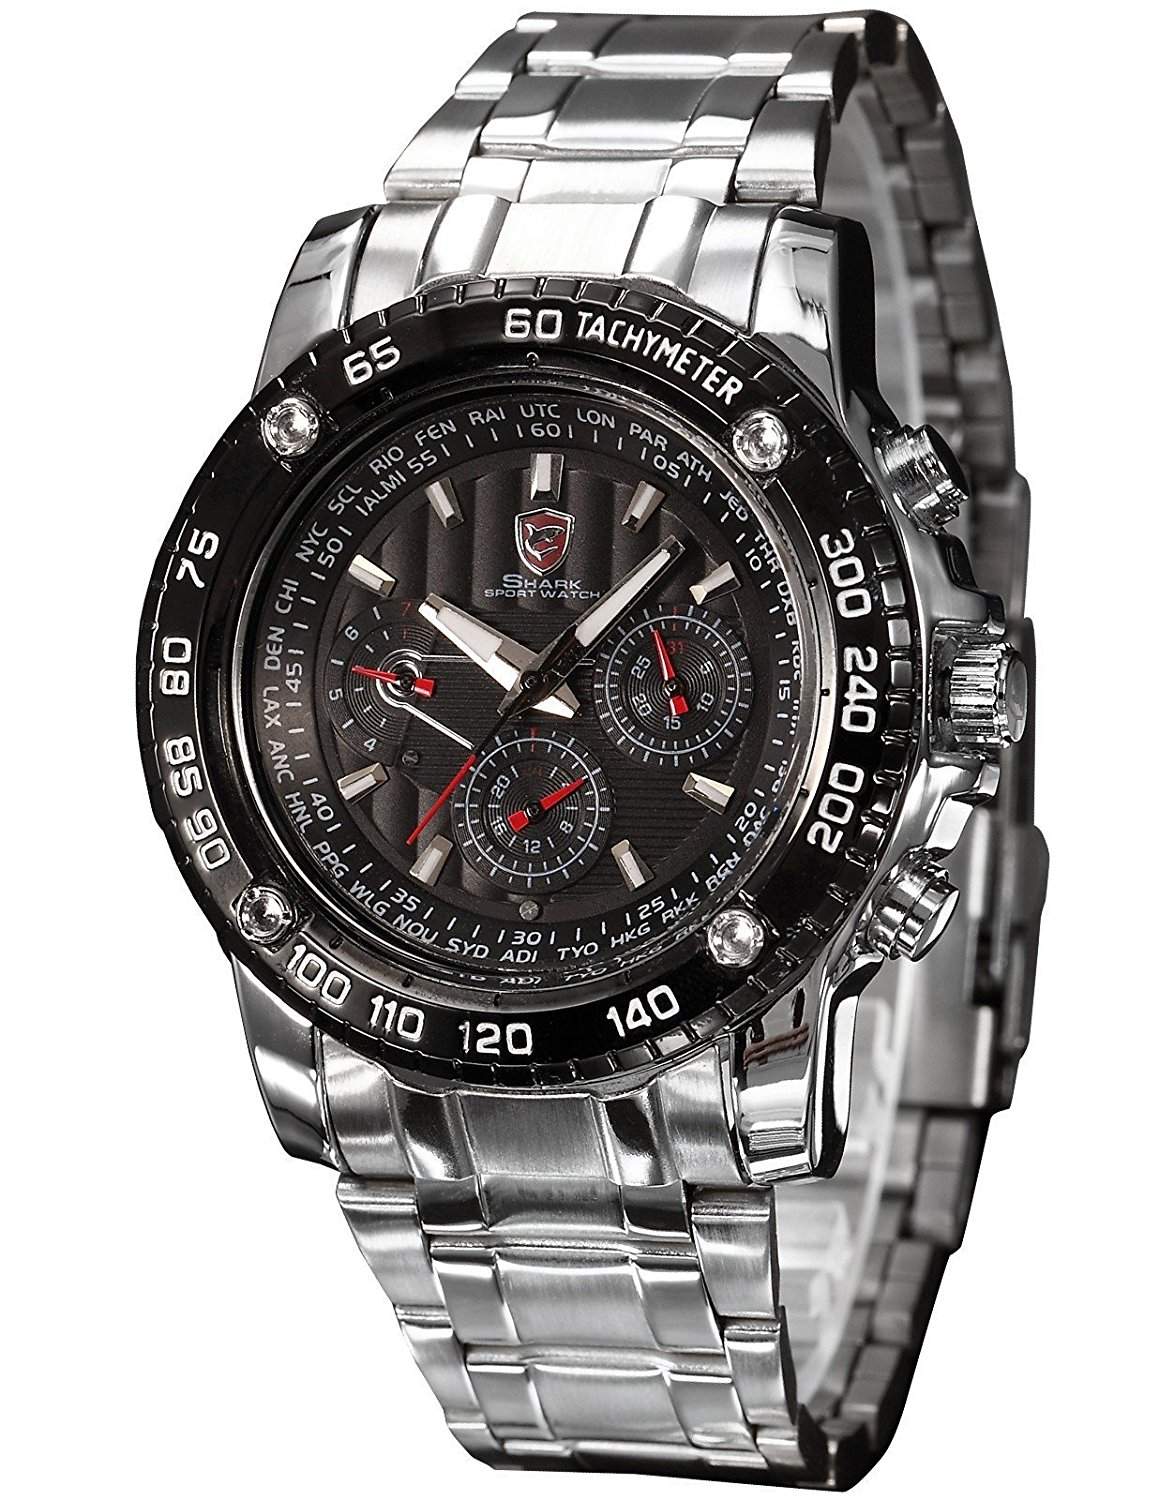 Shark Militaer Armbanduhr Analog Leuchtzeiger Edelstahl Uhrband SH015